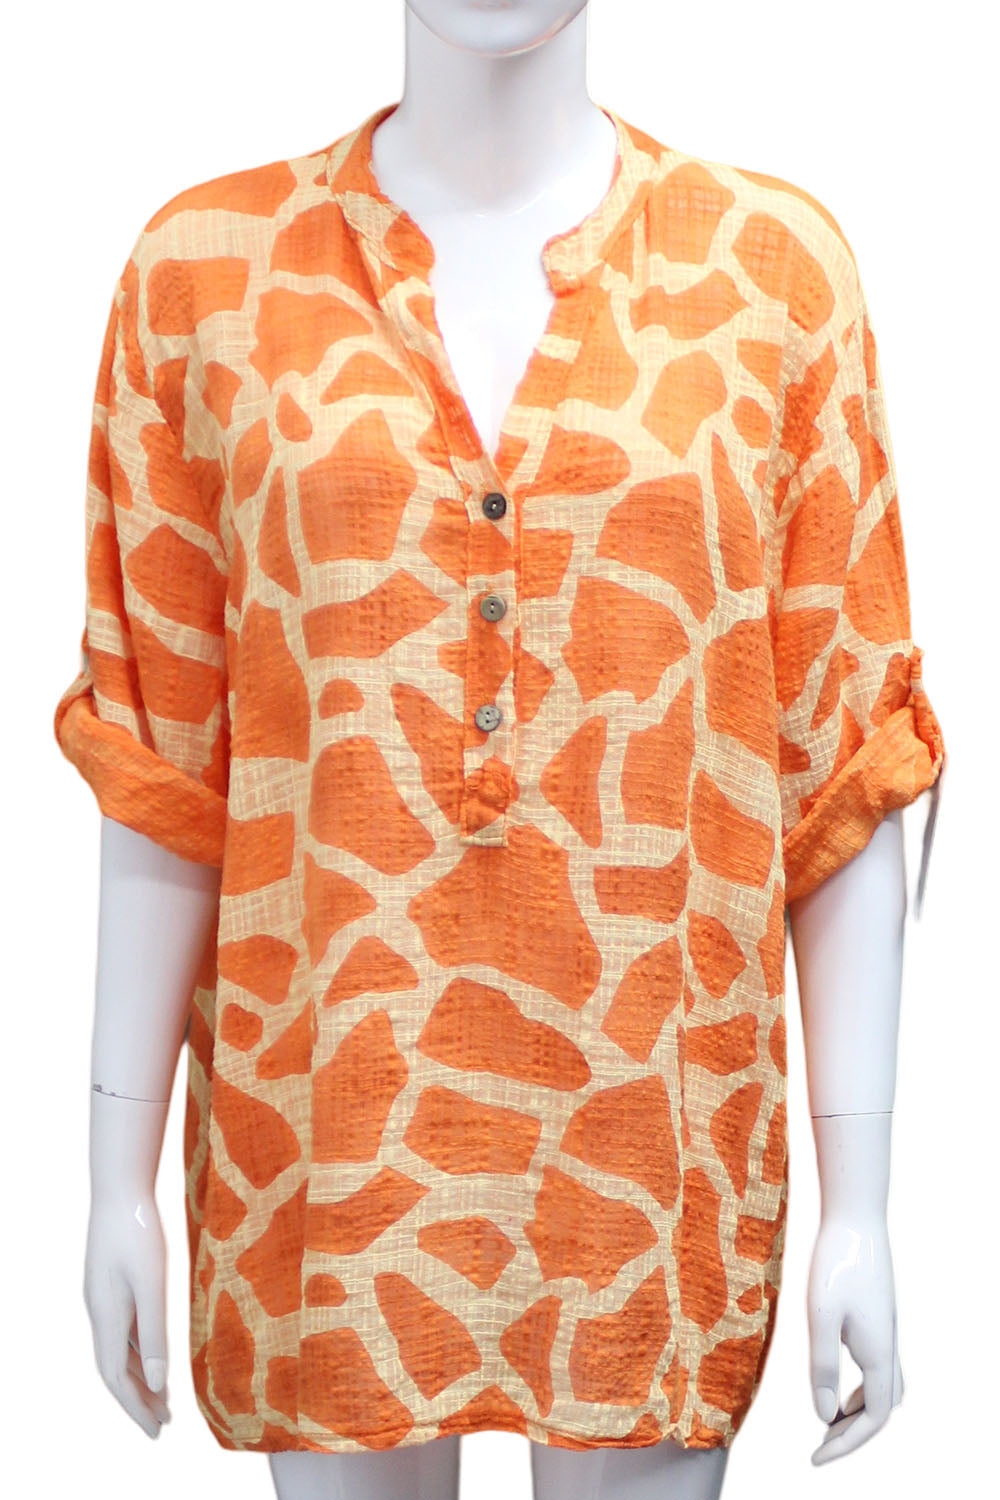 Giraffe Print Shirt